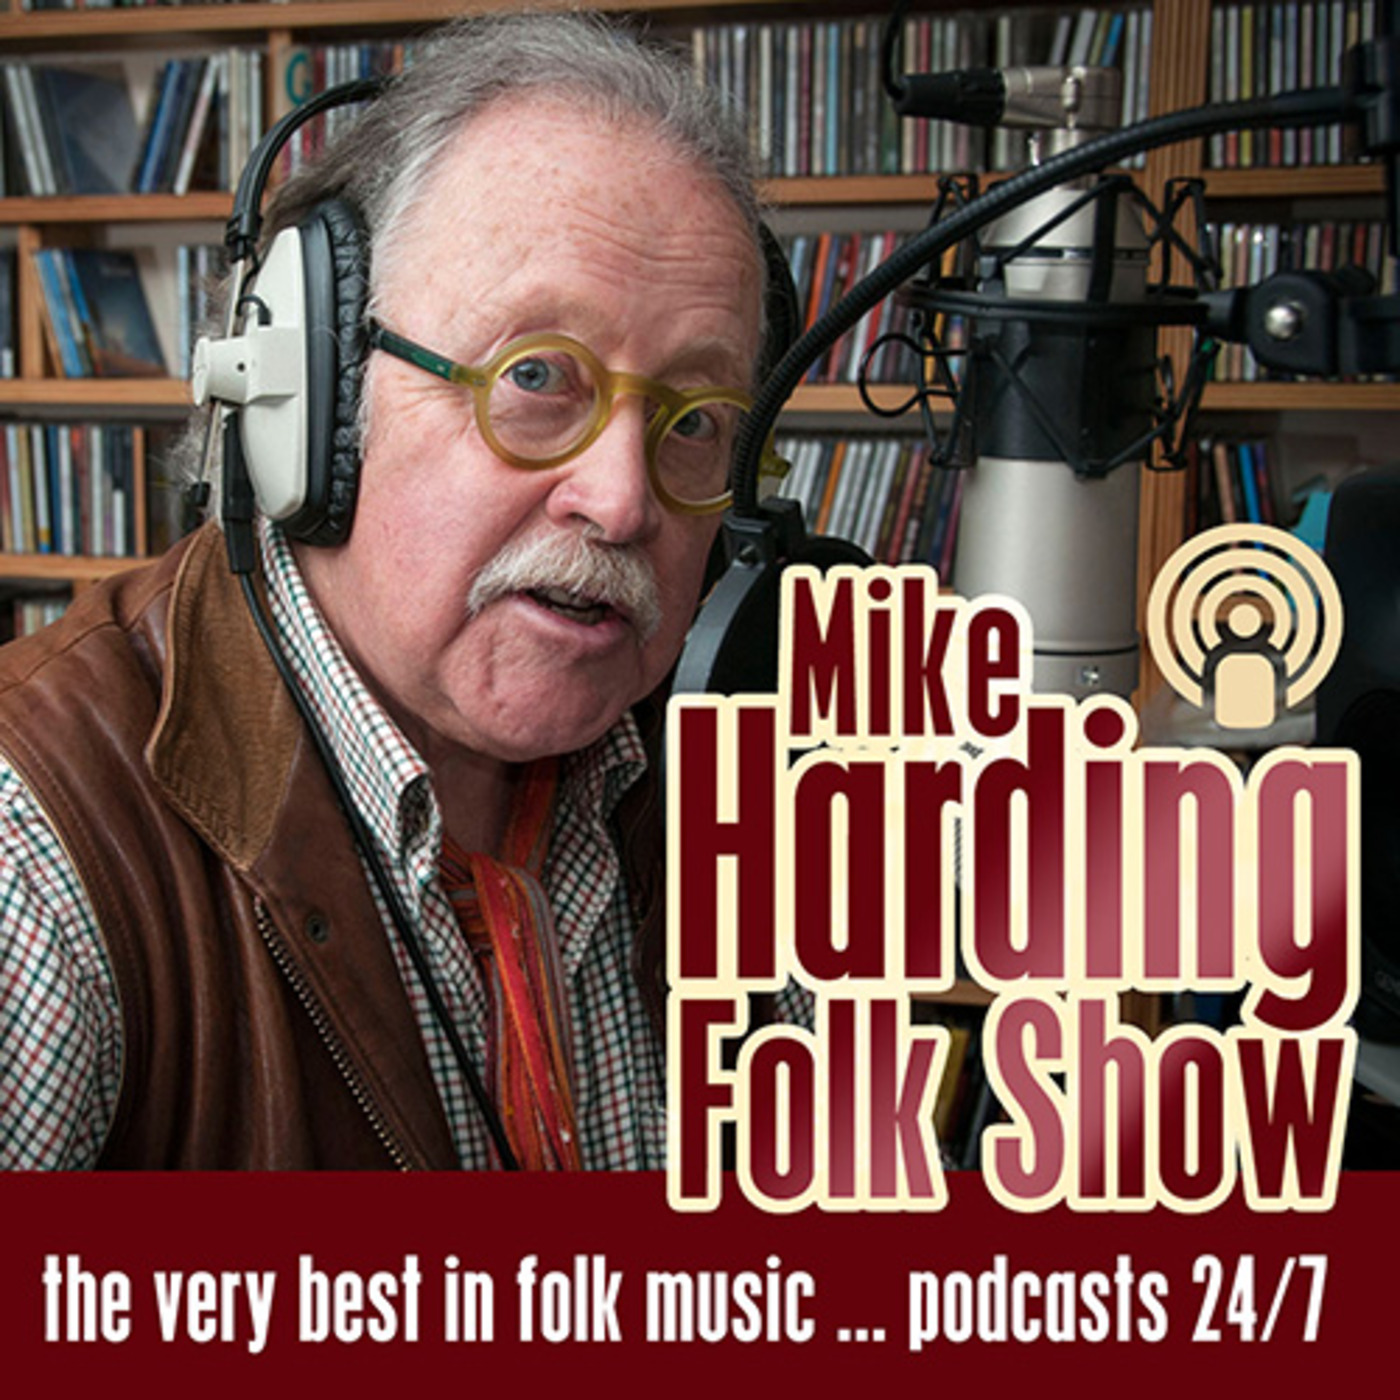 Mike Harding Folk Show 286